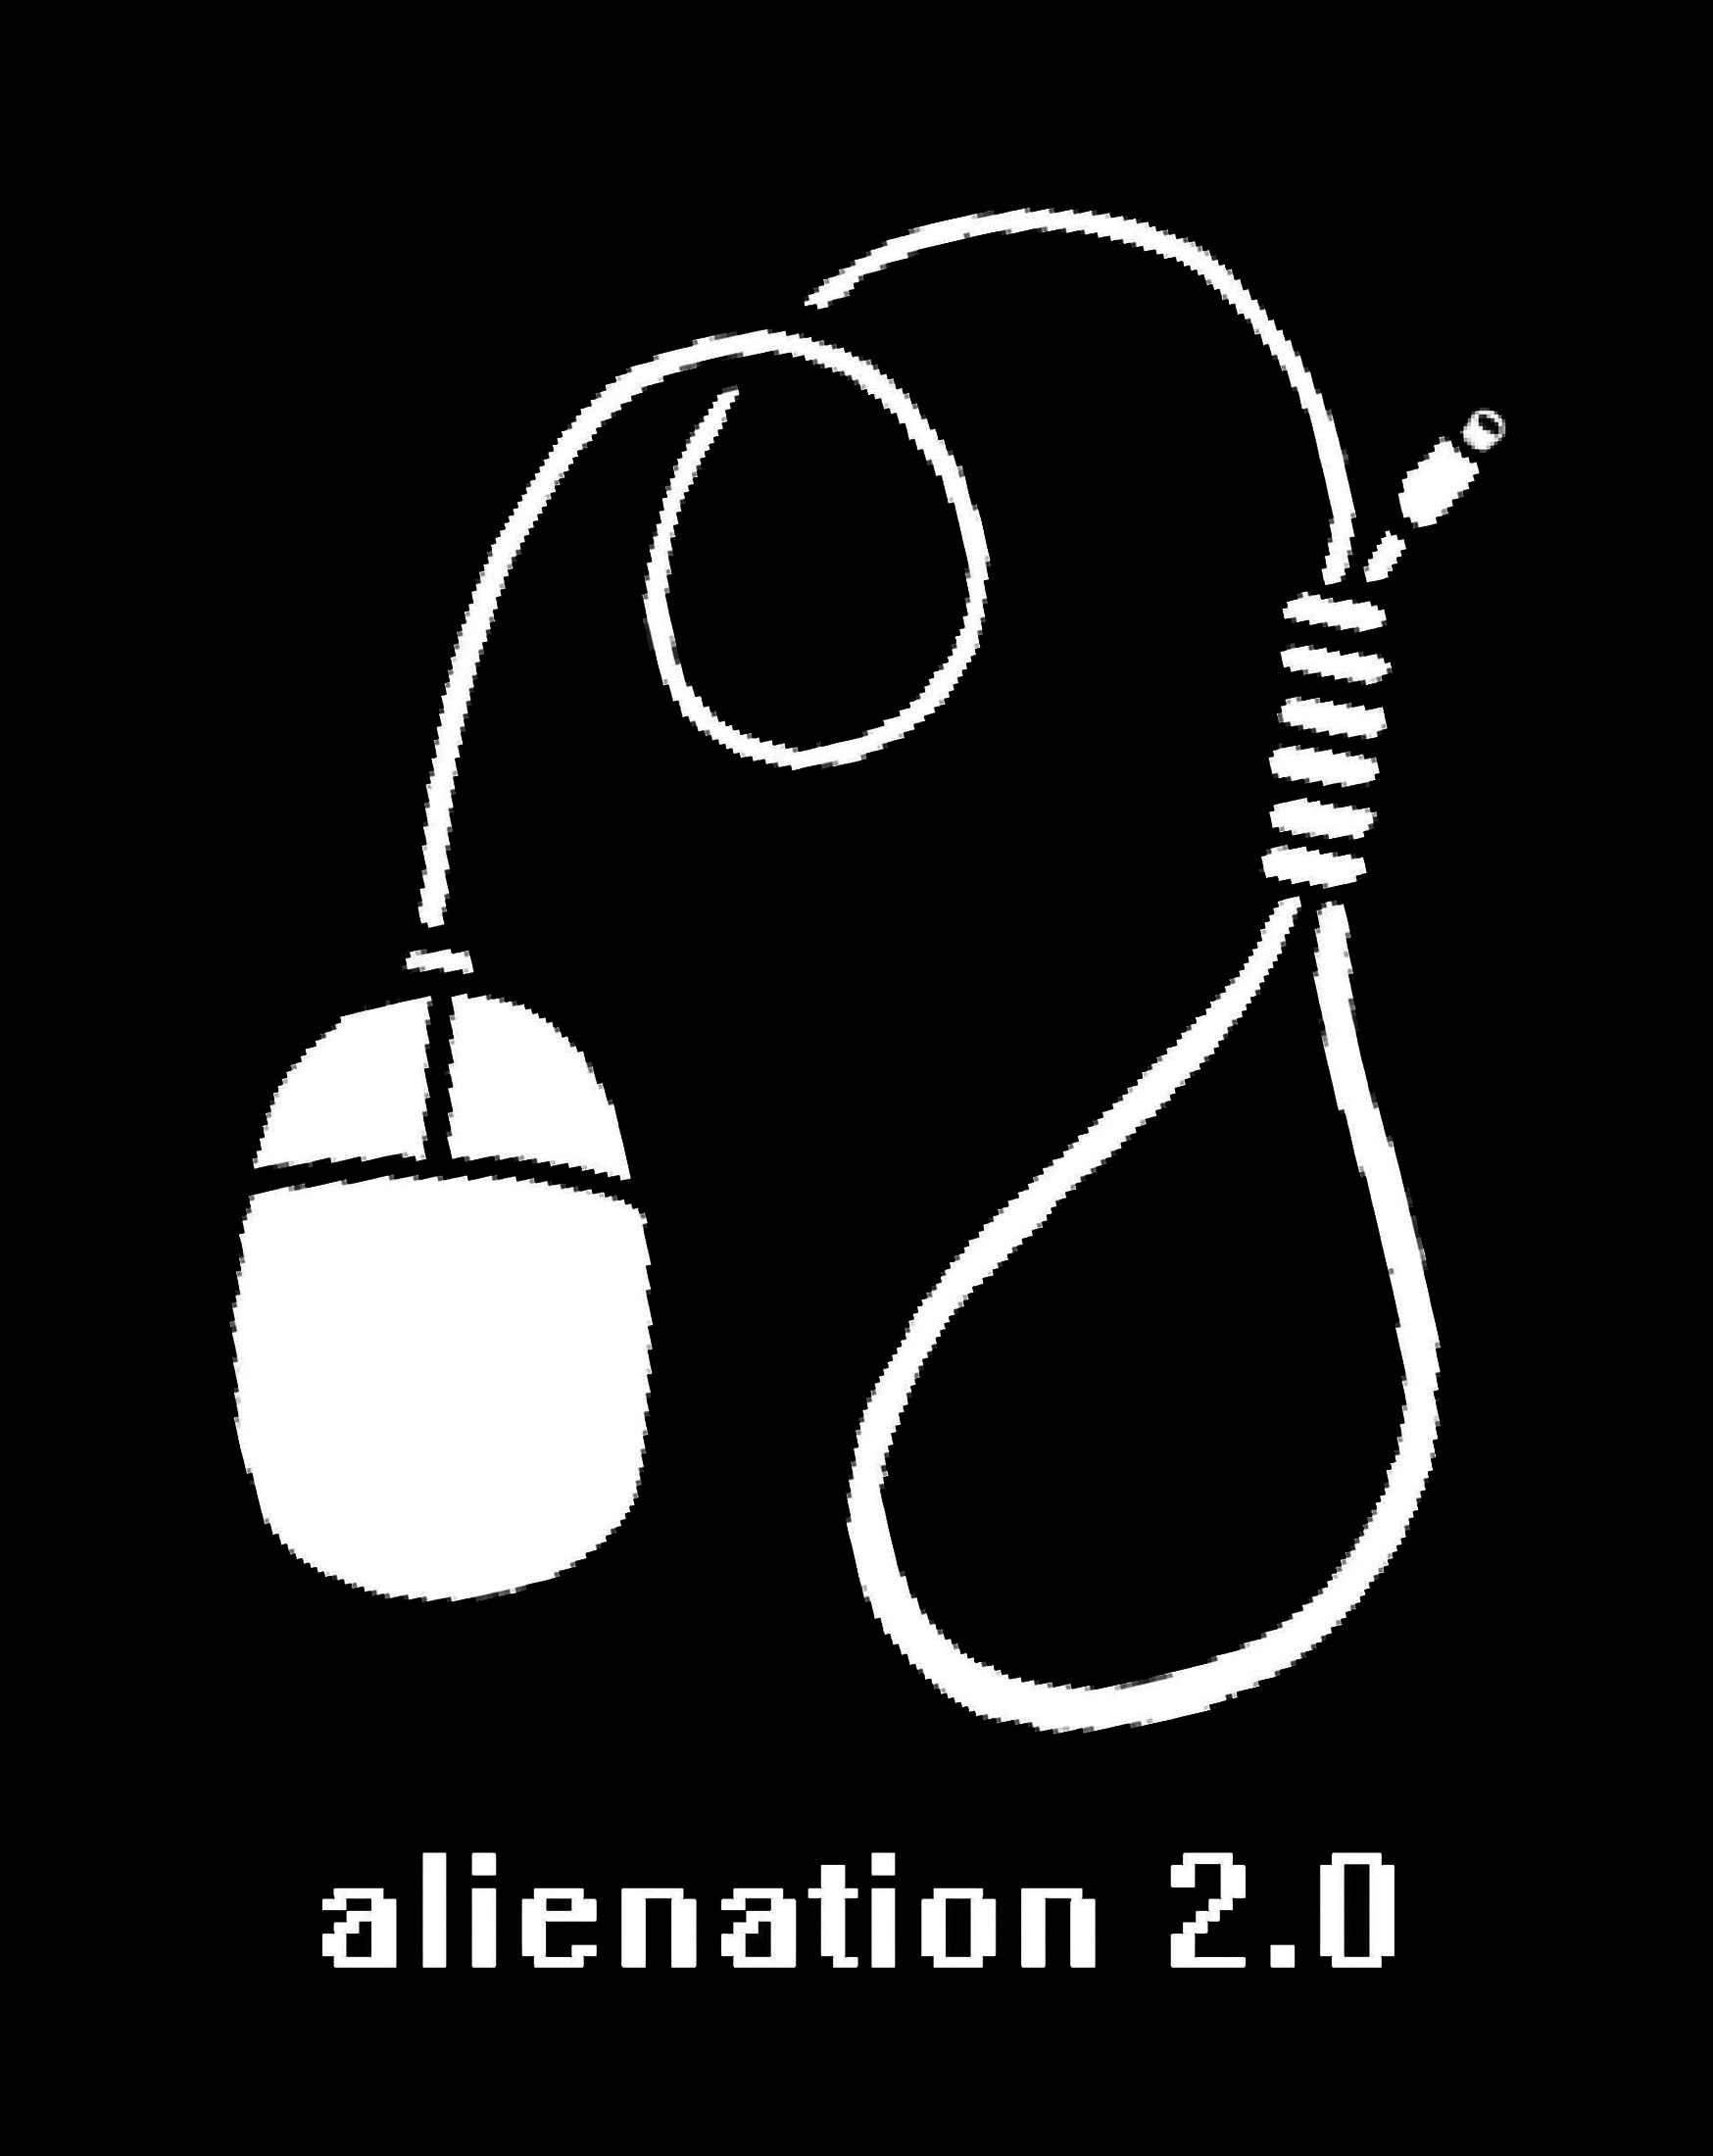 alienation 2.0 - graficanera - NO COPYRIGHT